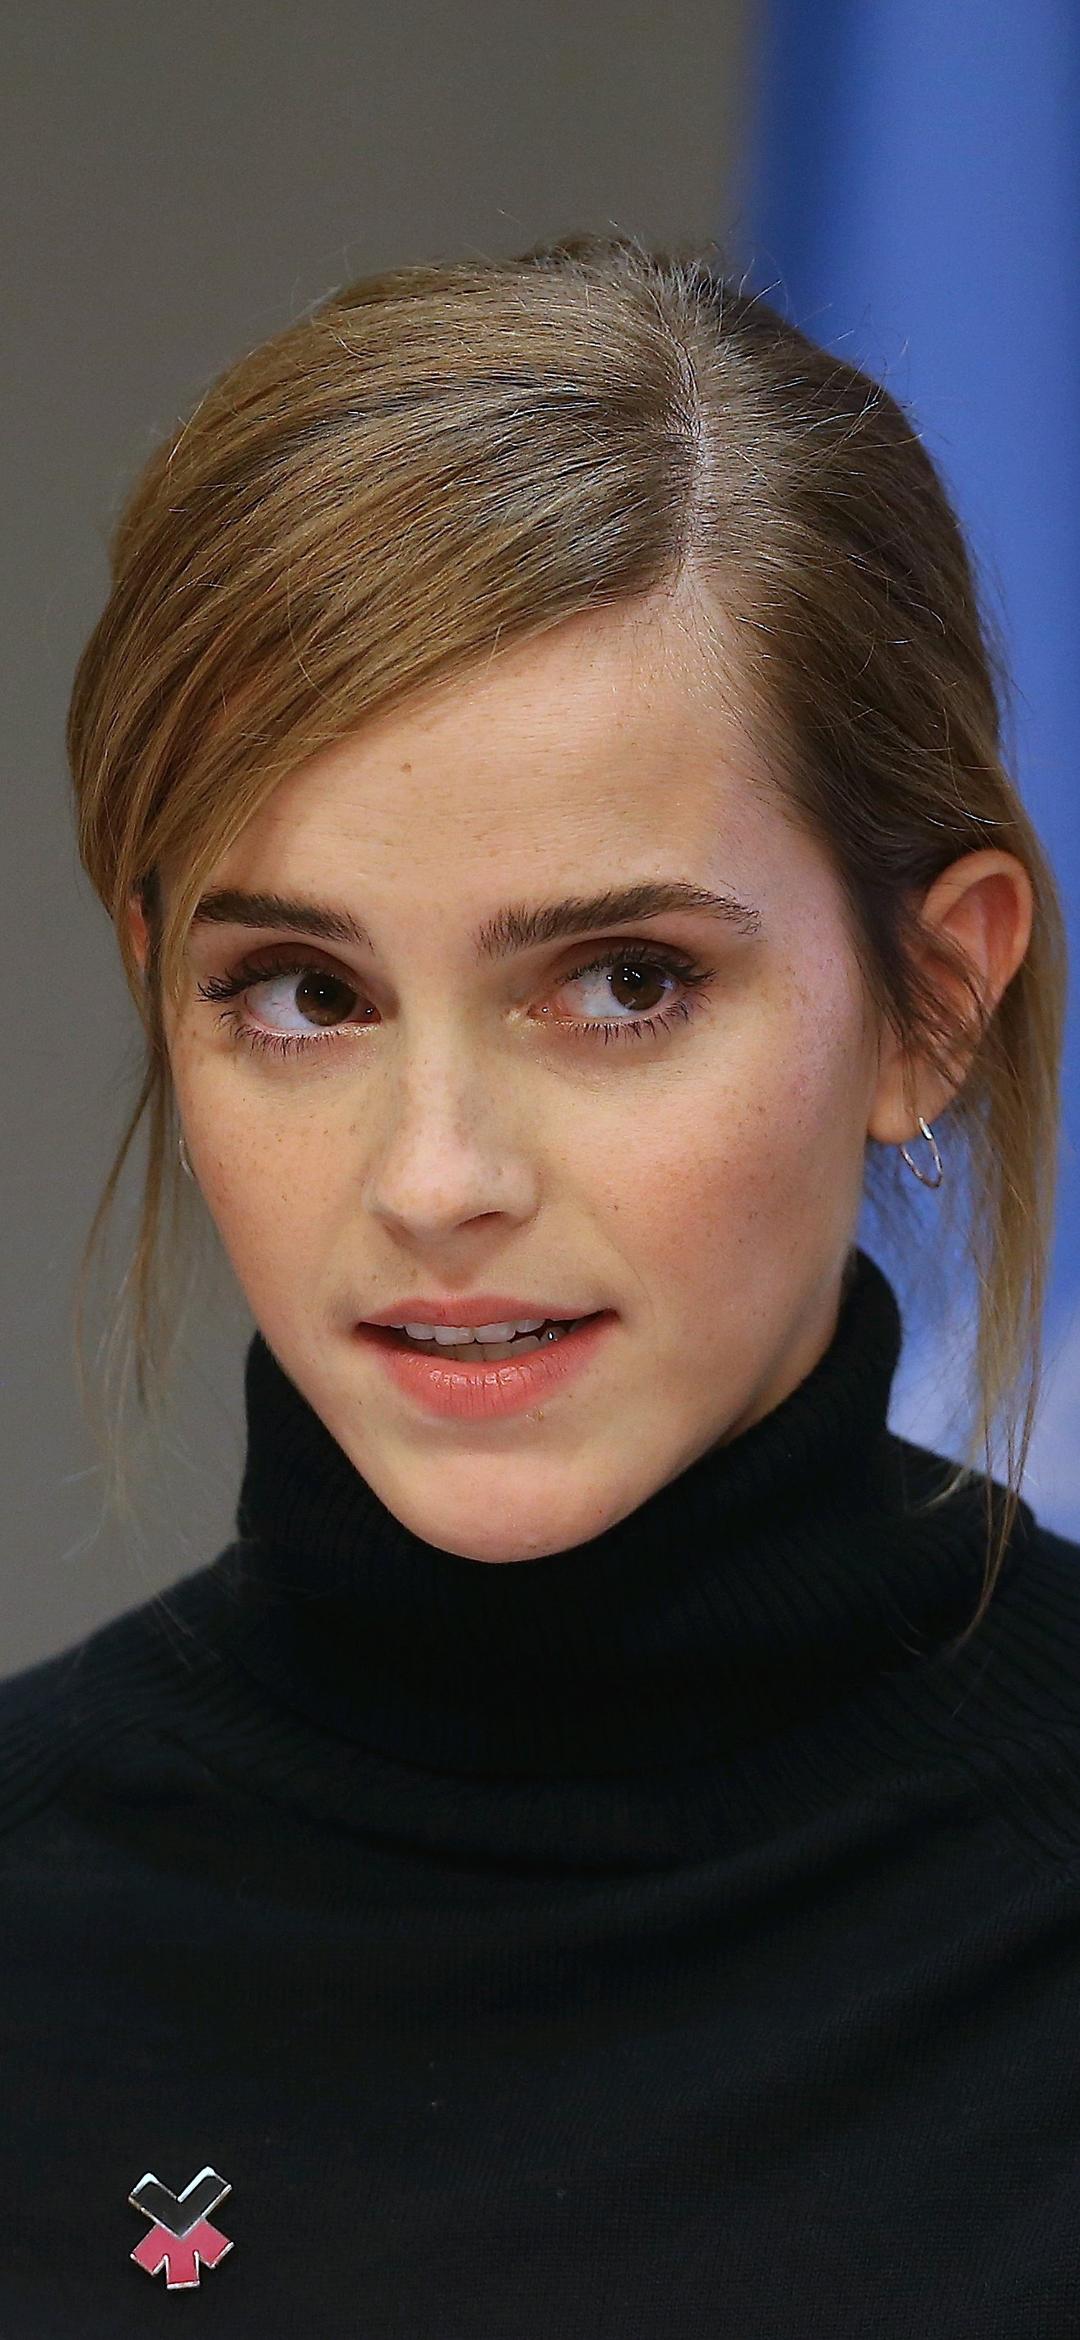 09_Emma Watson.jpg